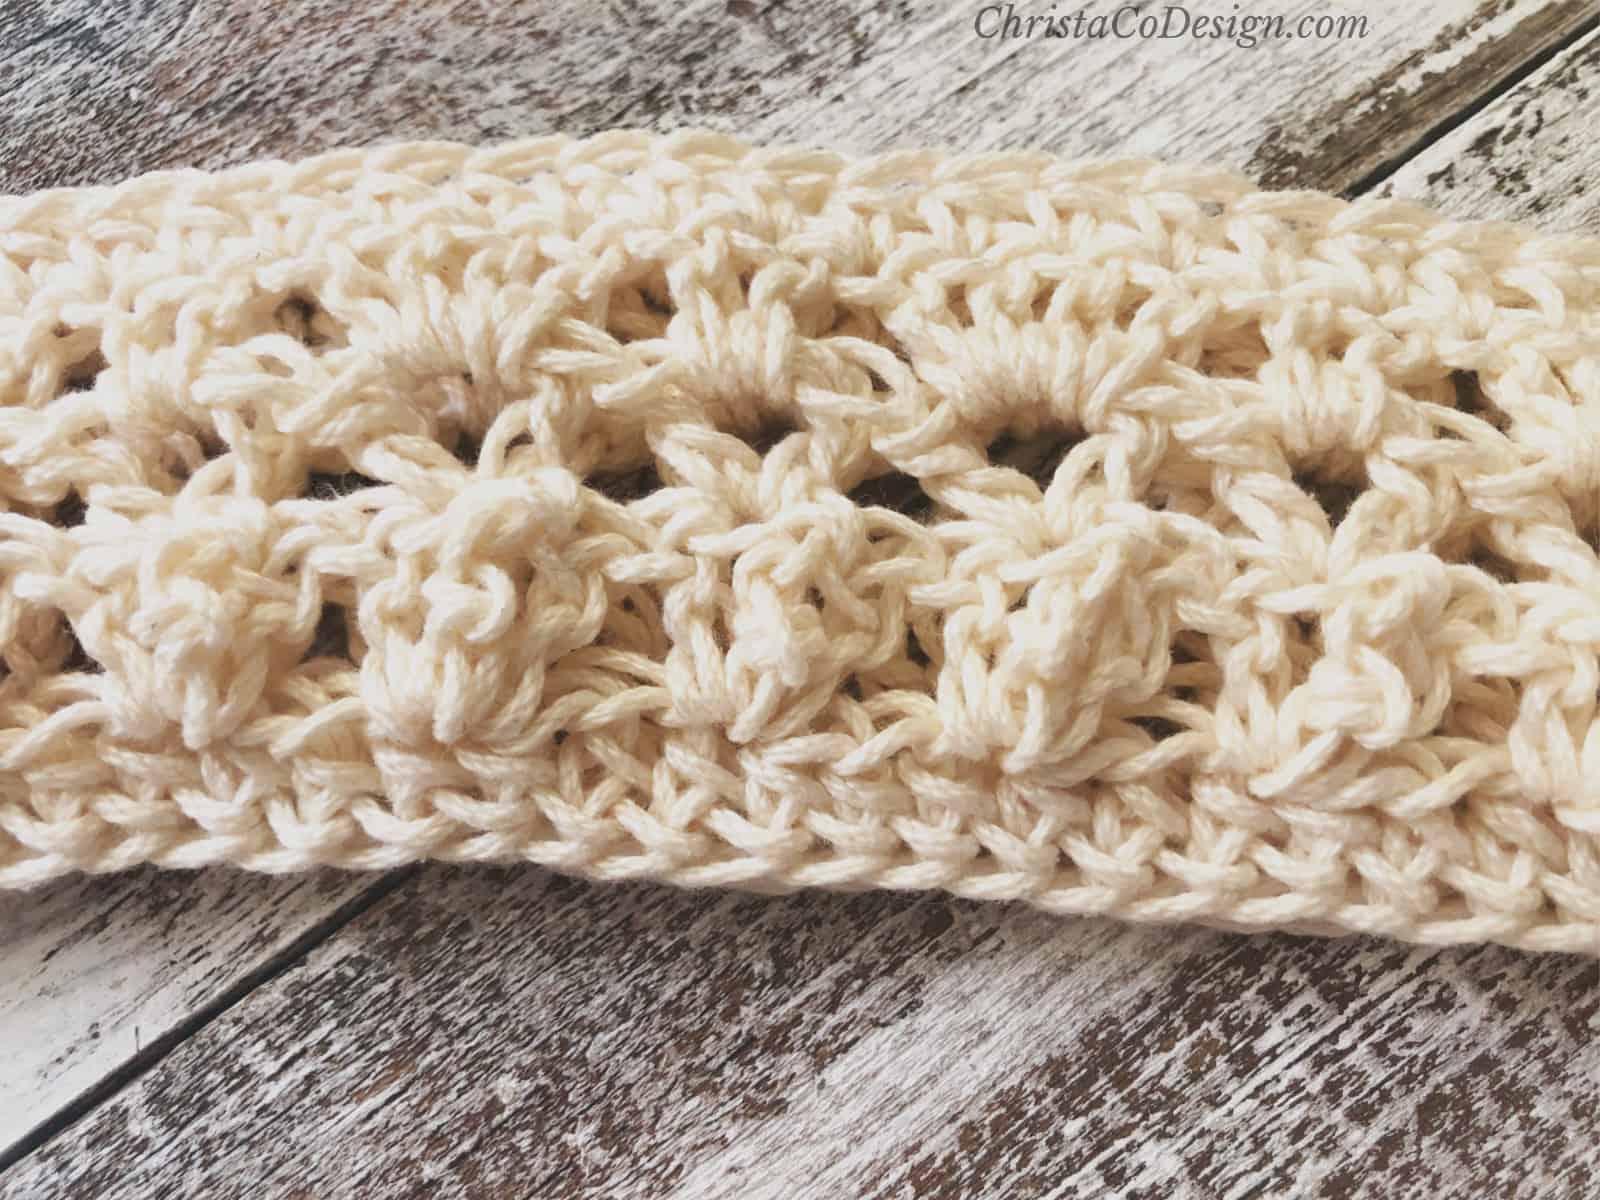 Crochet summer headband pattern in cream free in 5 sizes.